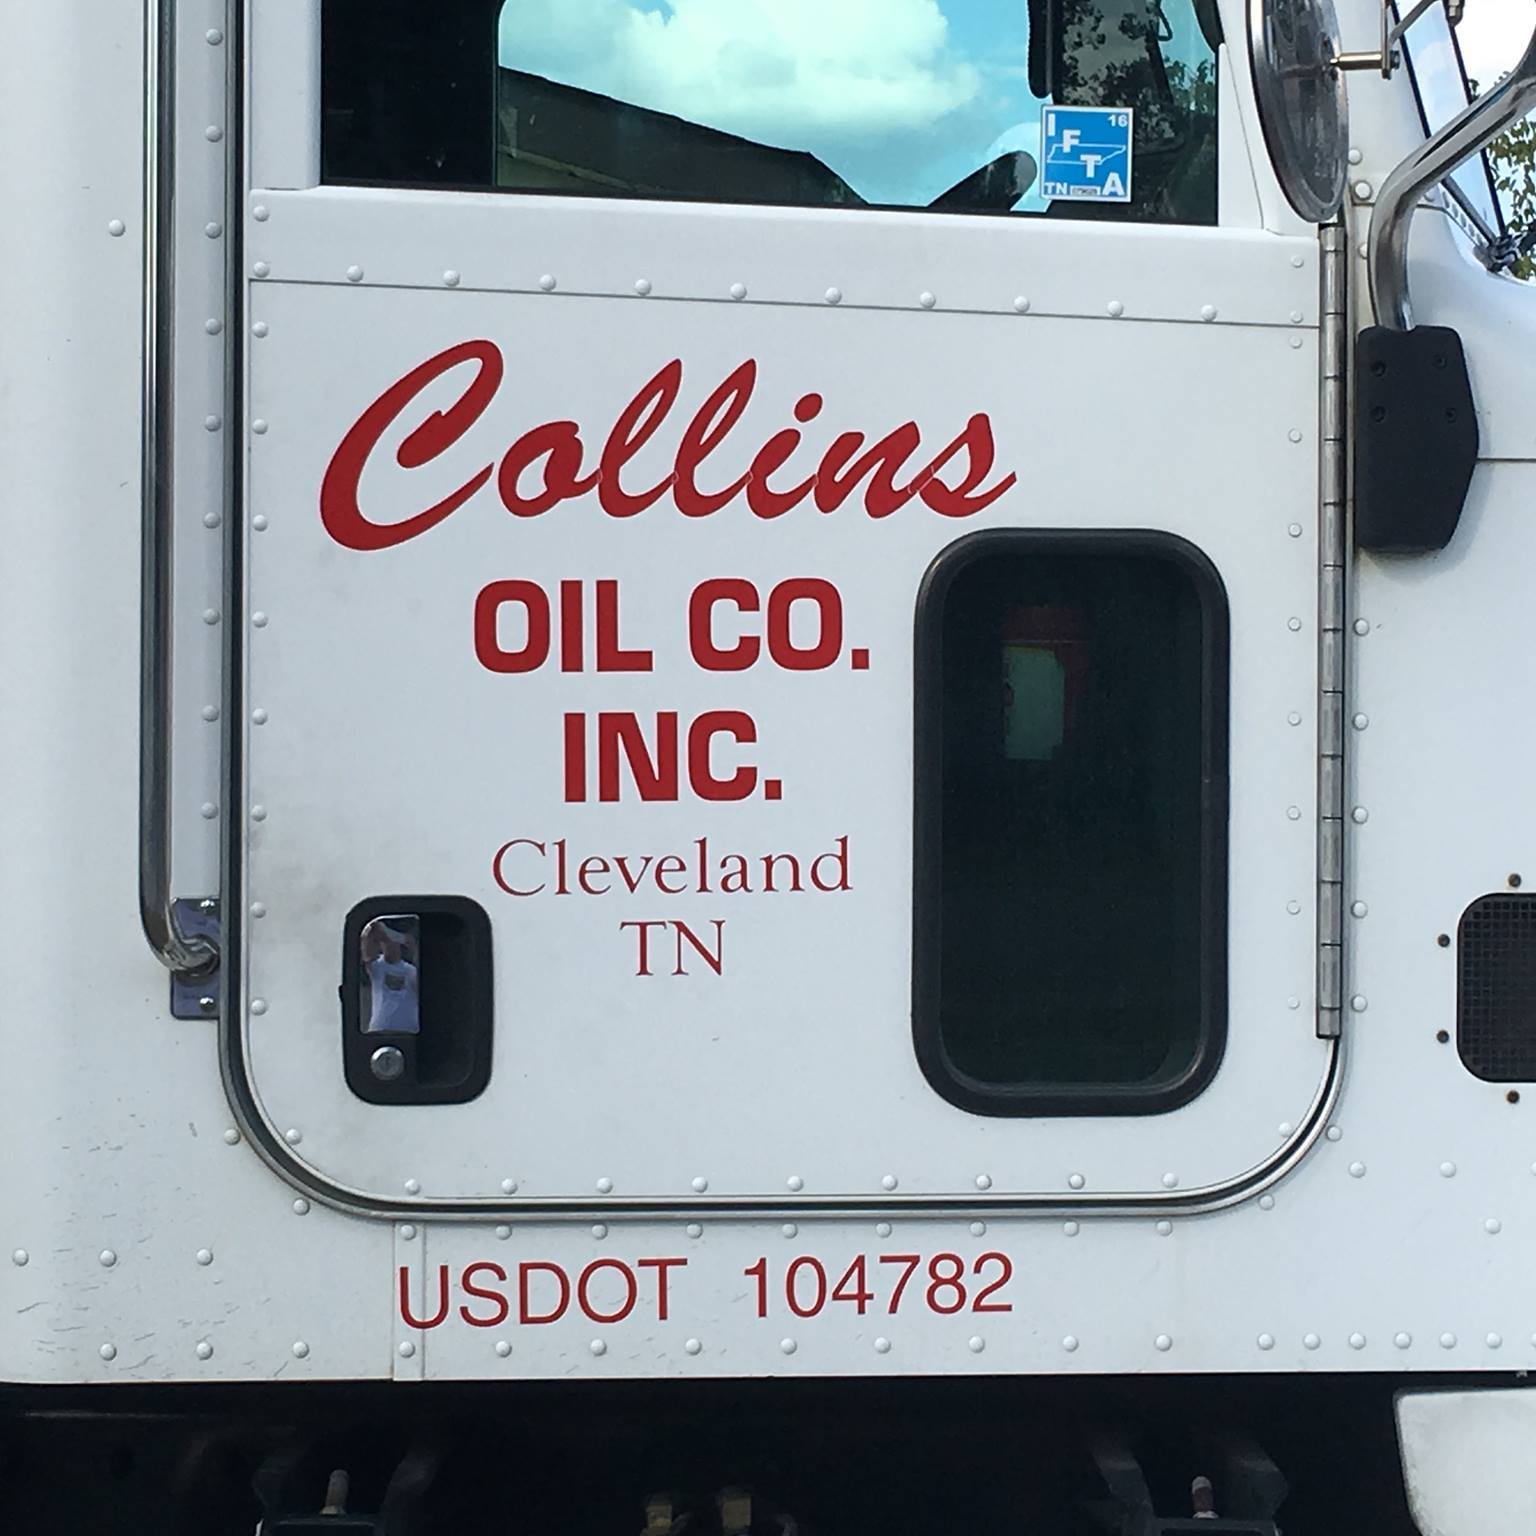 Collins Oil Co